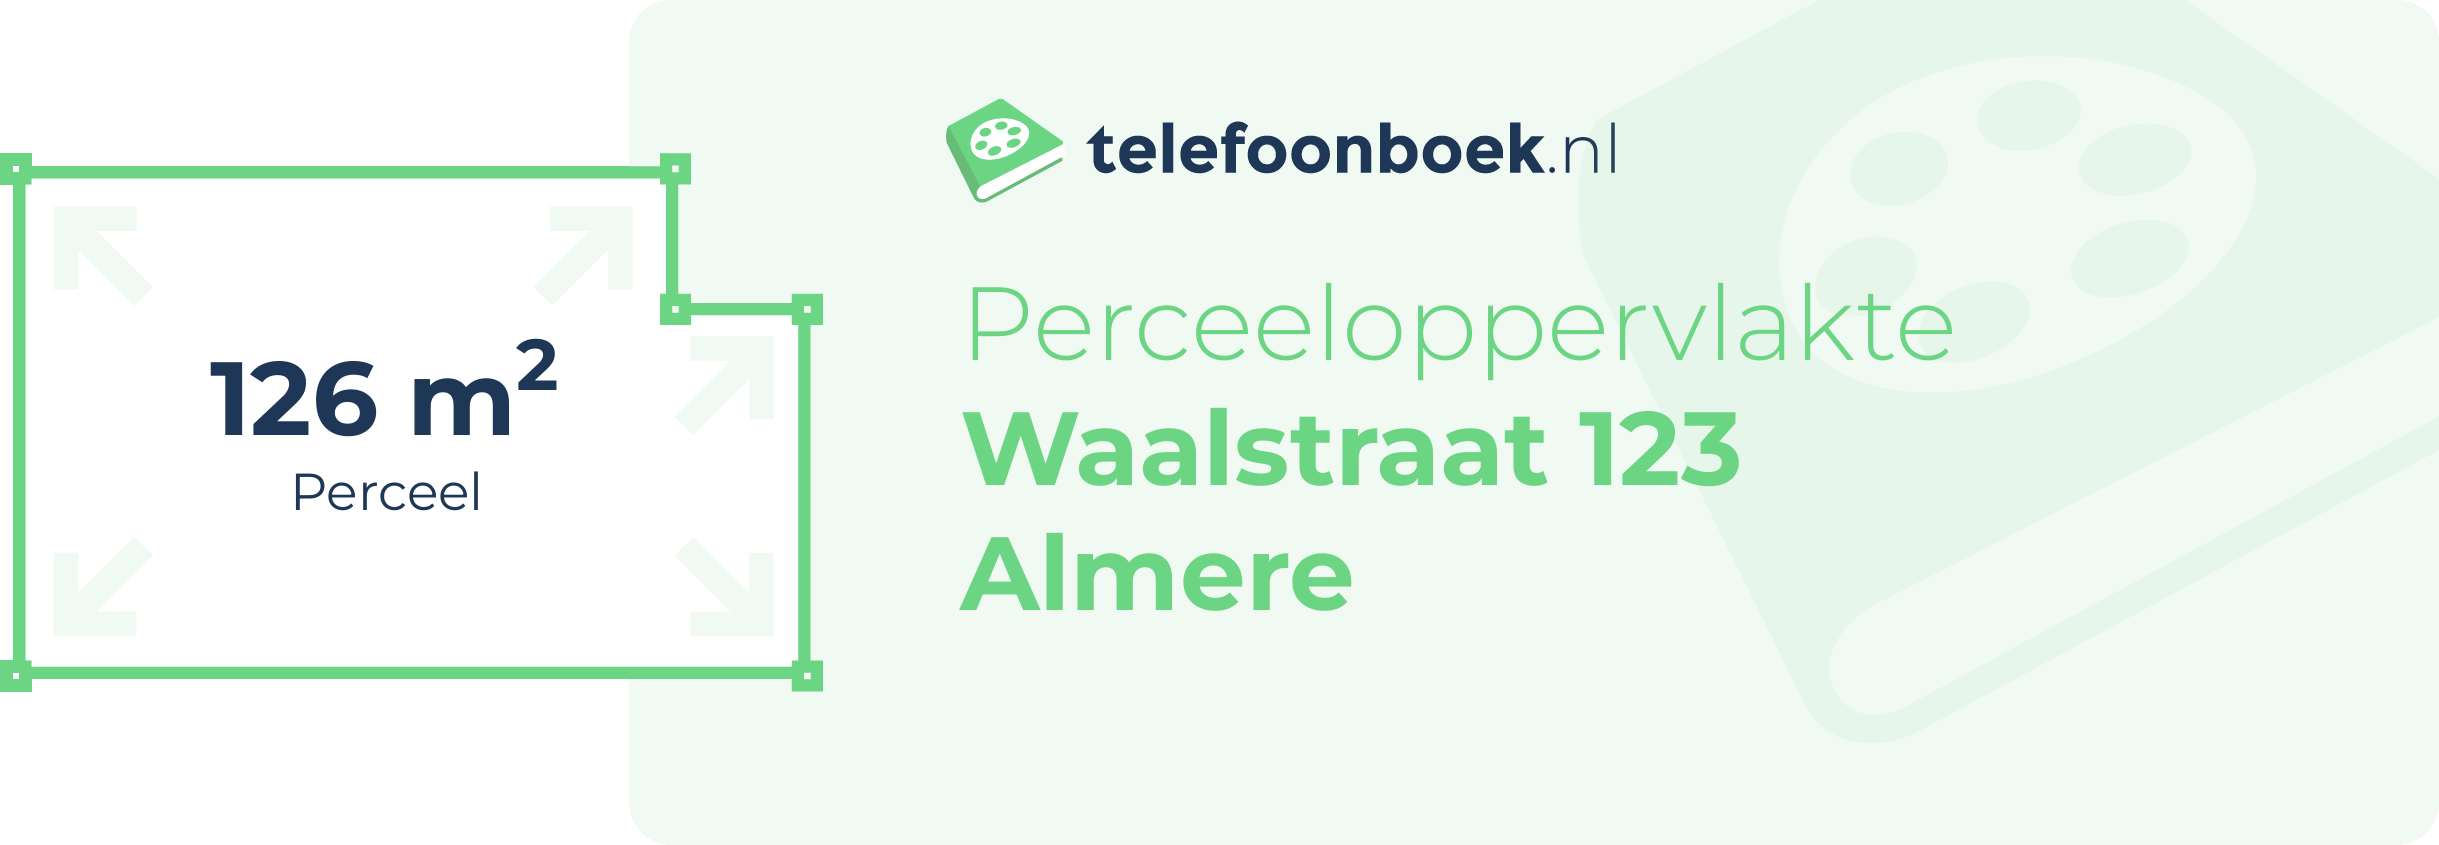 Perceeloppervlakte Waalstraat 123 Almere